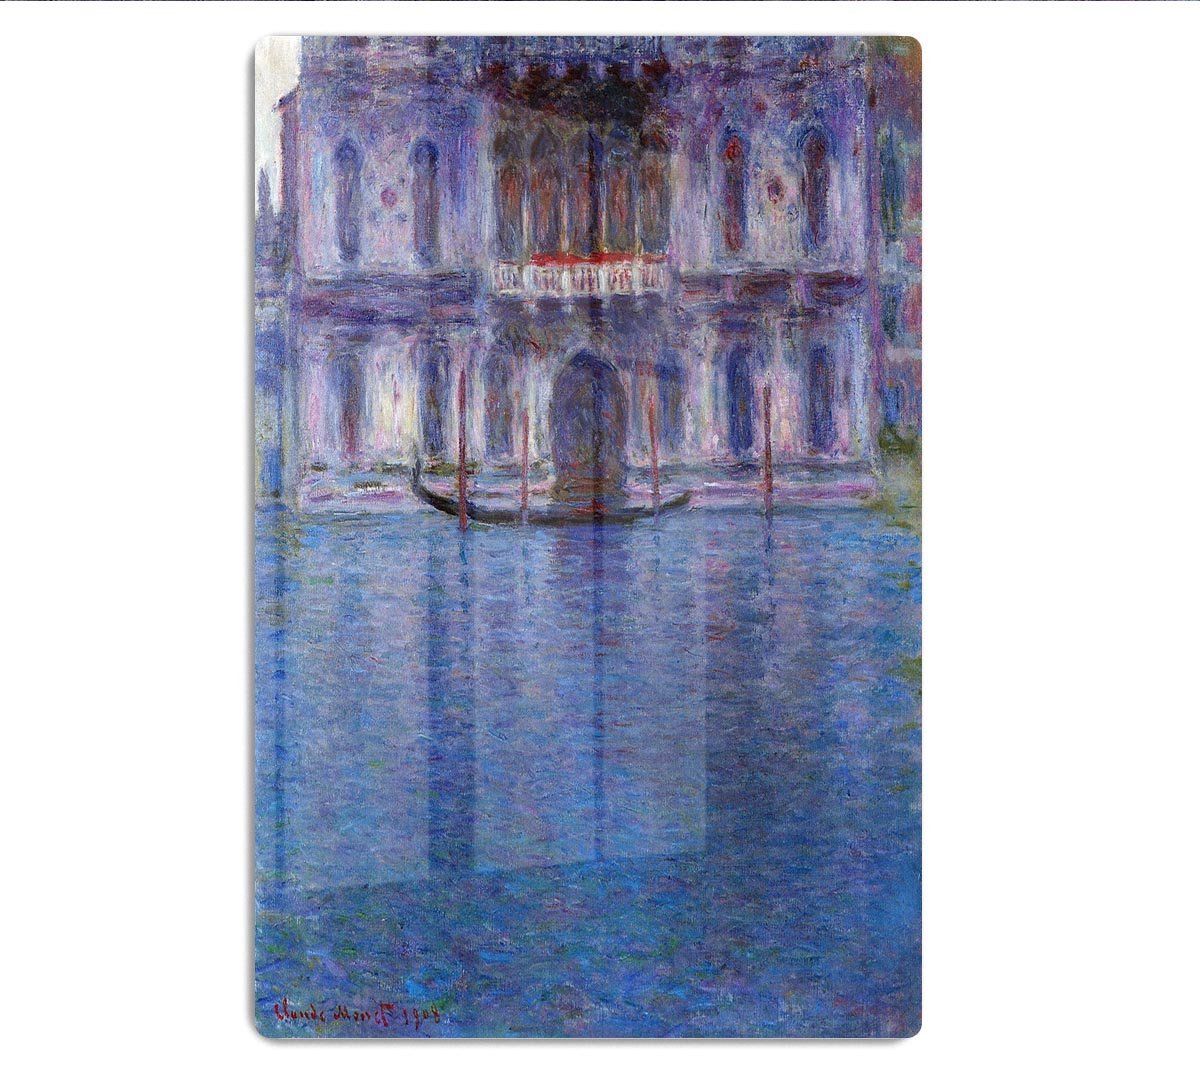 Palazzo 1 by Monet HD Metal Print